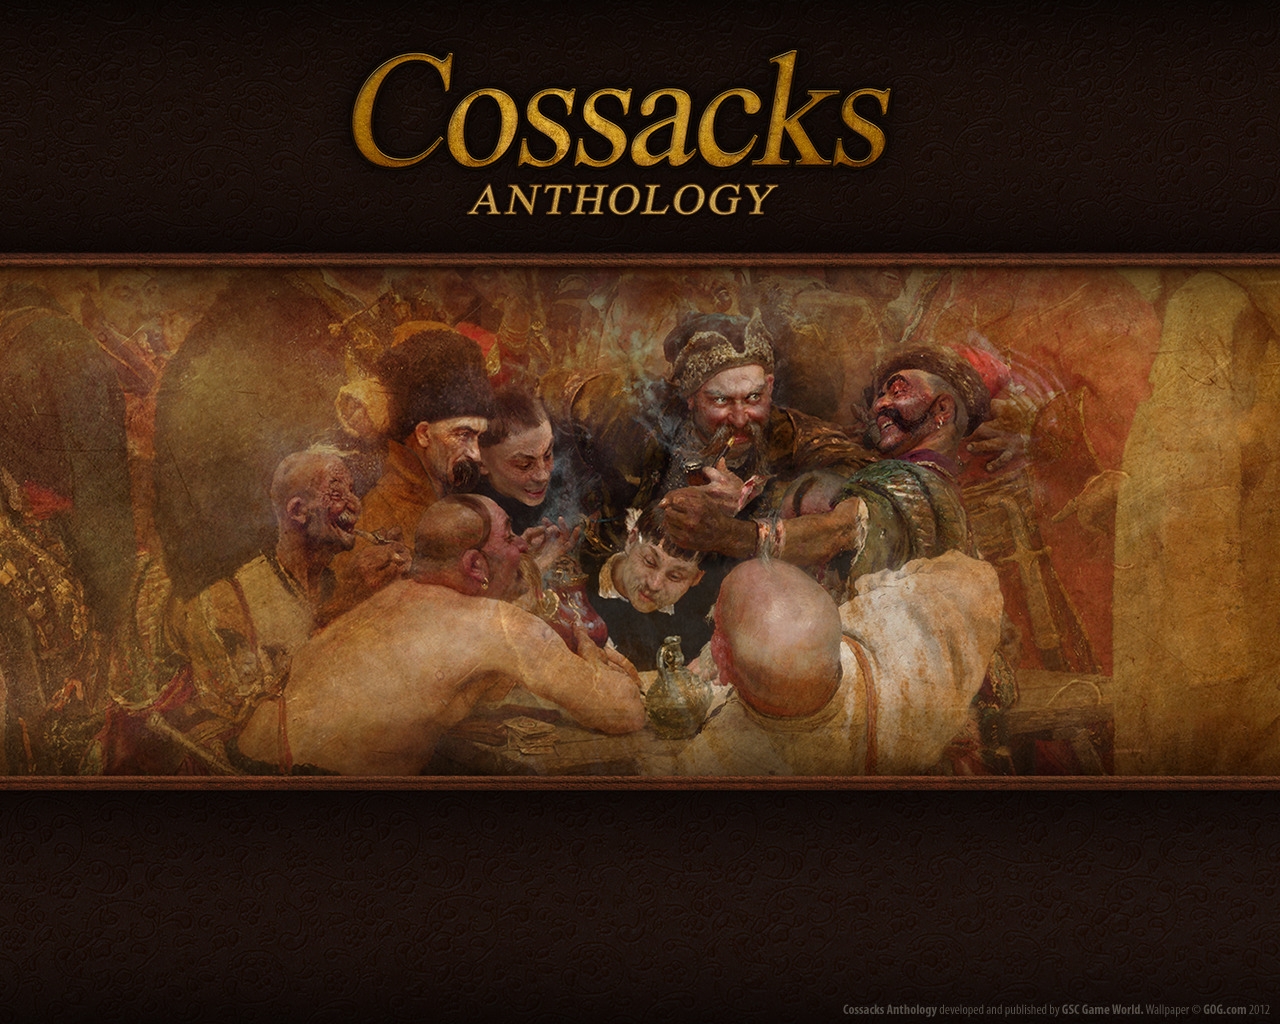 Cossacks Anthology for 1280 x 1024 resolution